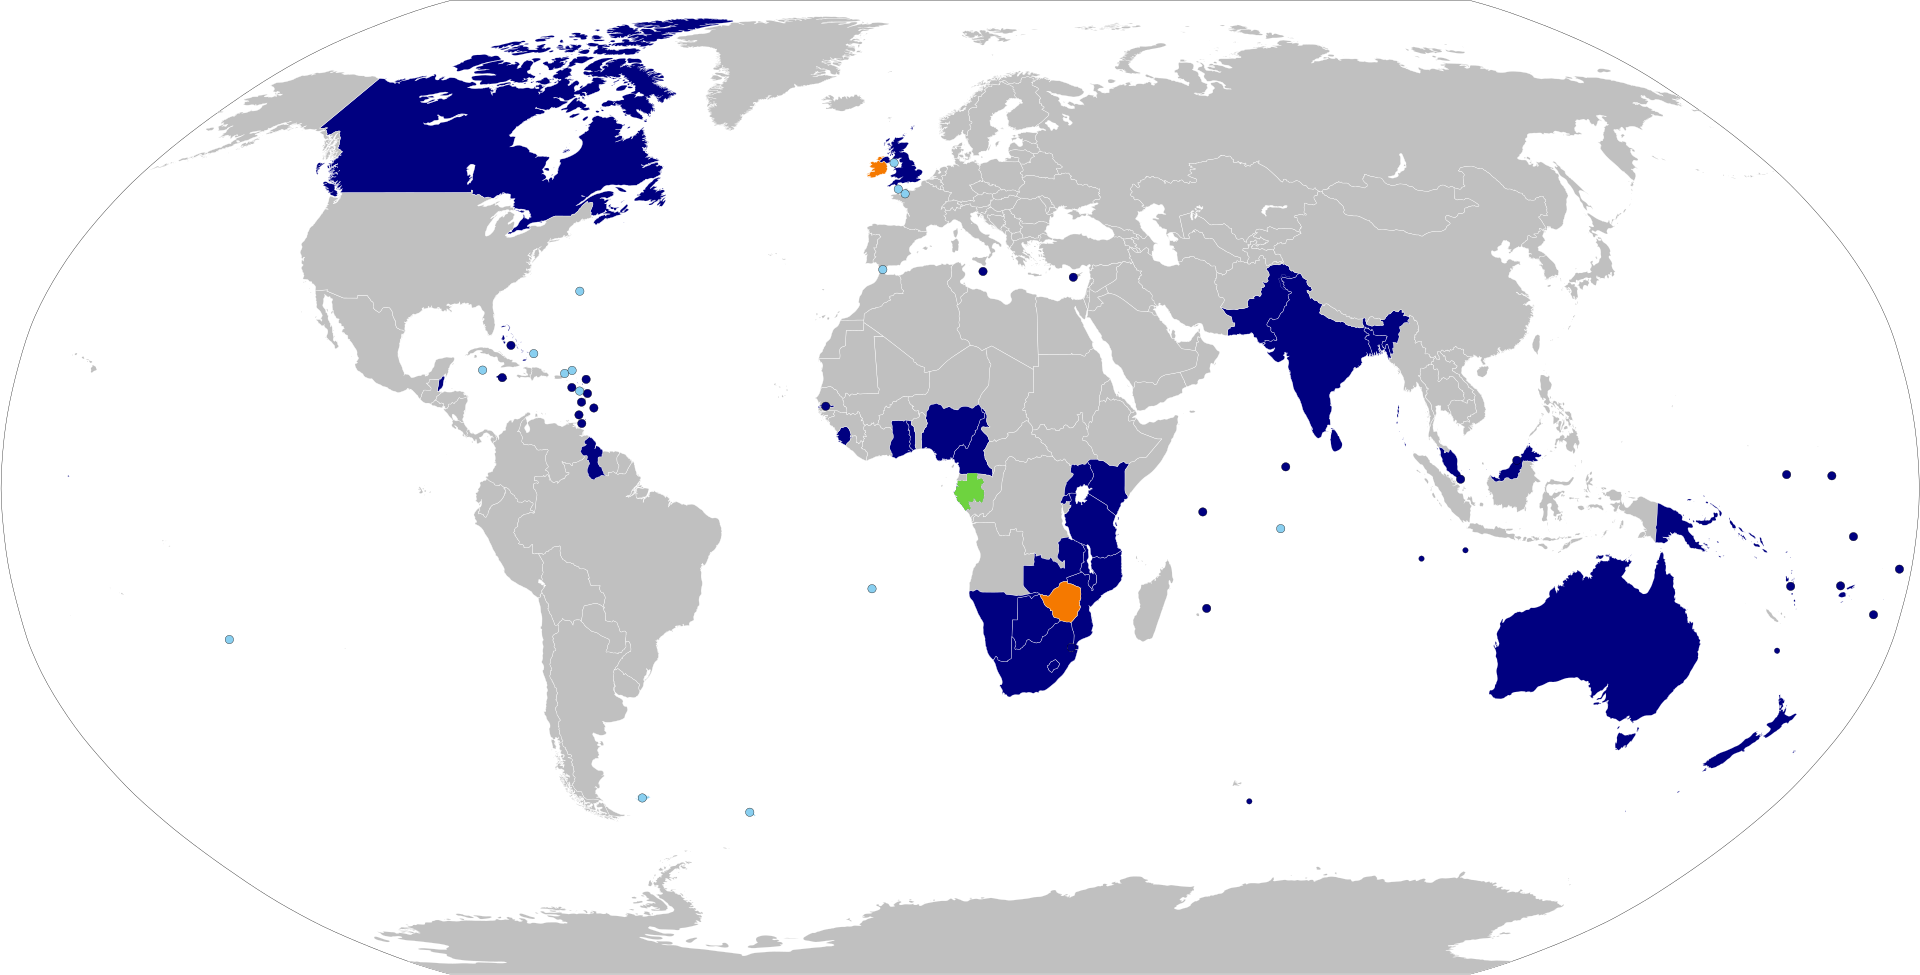 Dark Blue: Current member state Green: Suspended member state Orange: Former member states Light Blue: British Overseas Territories and Crown Dependencies